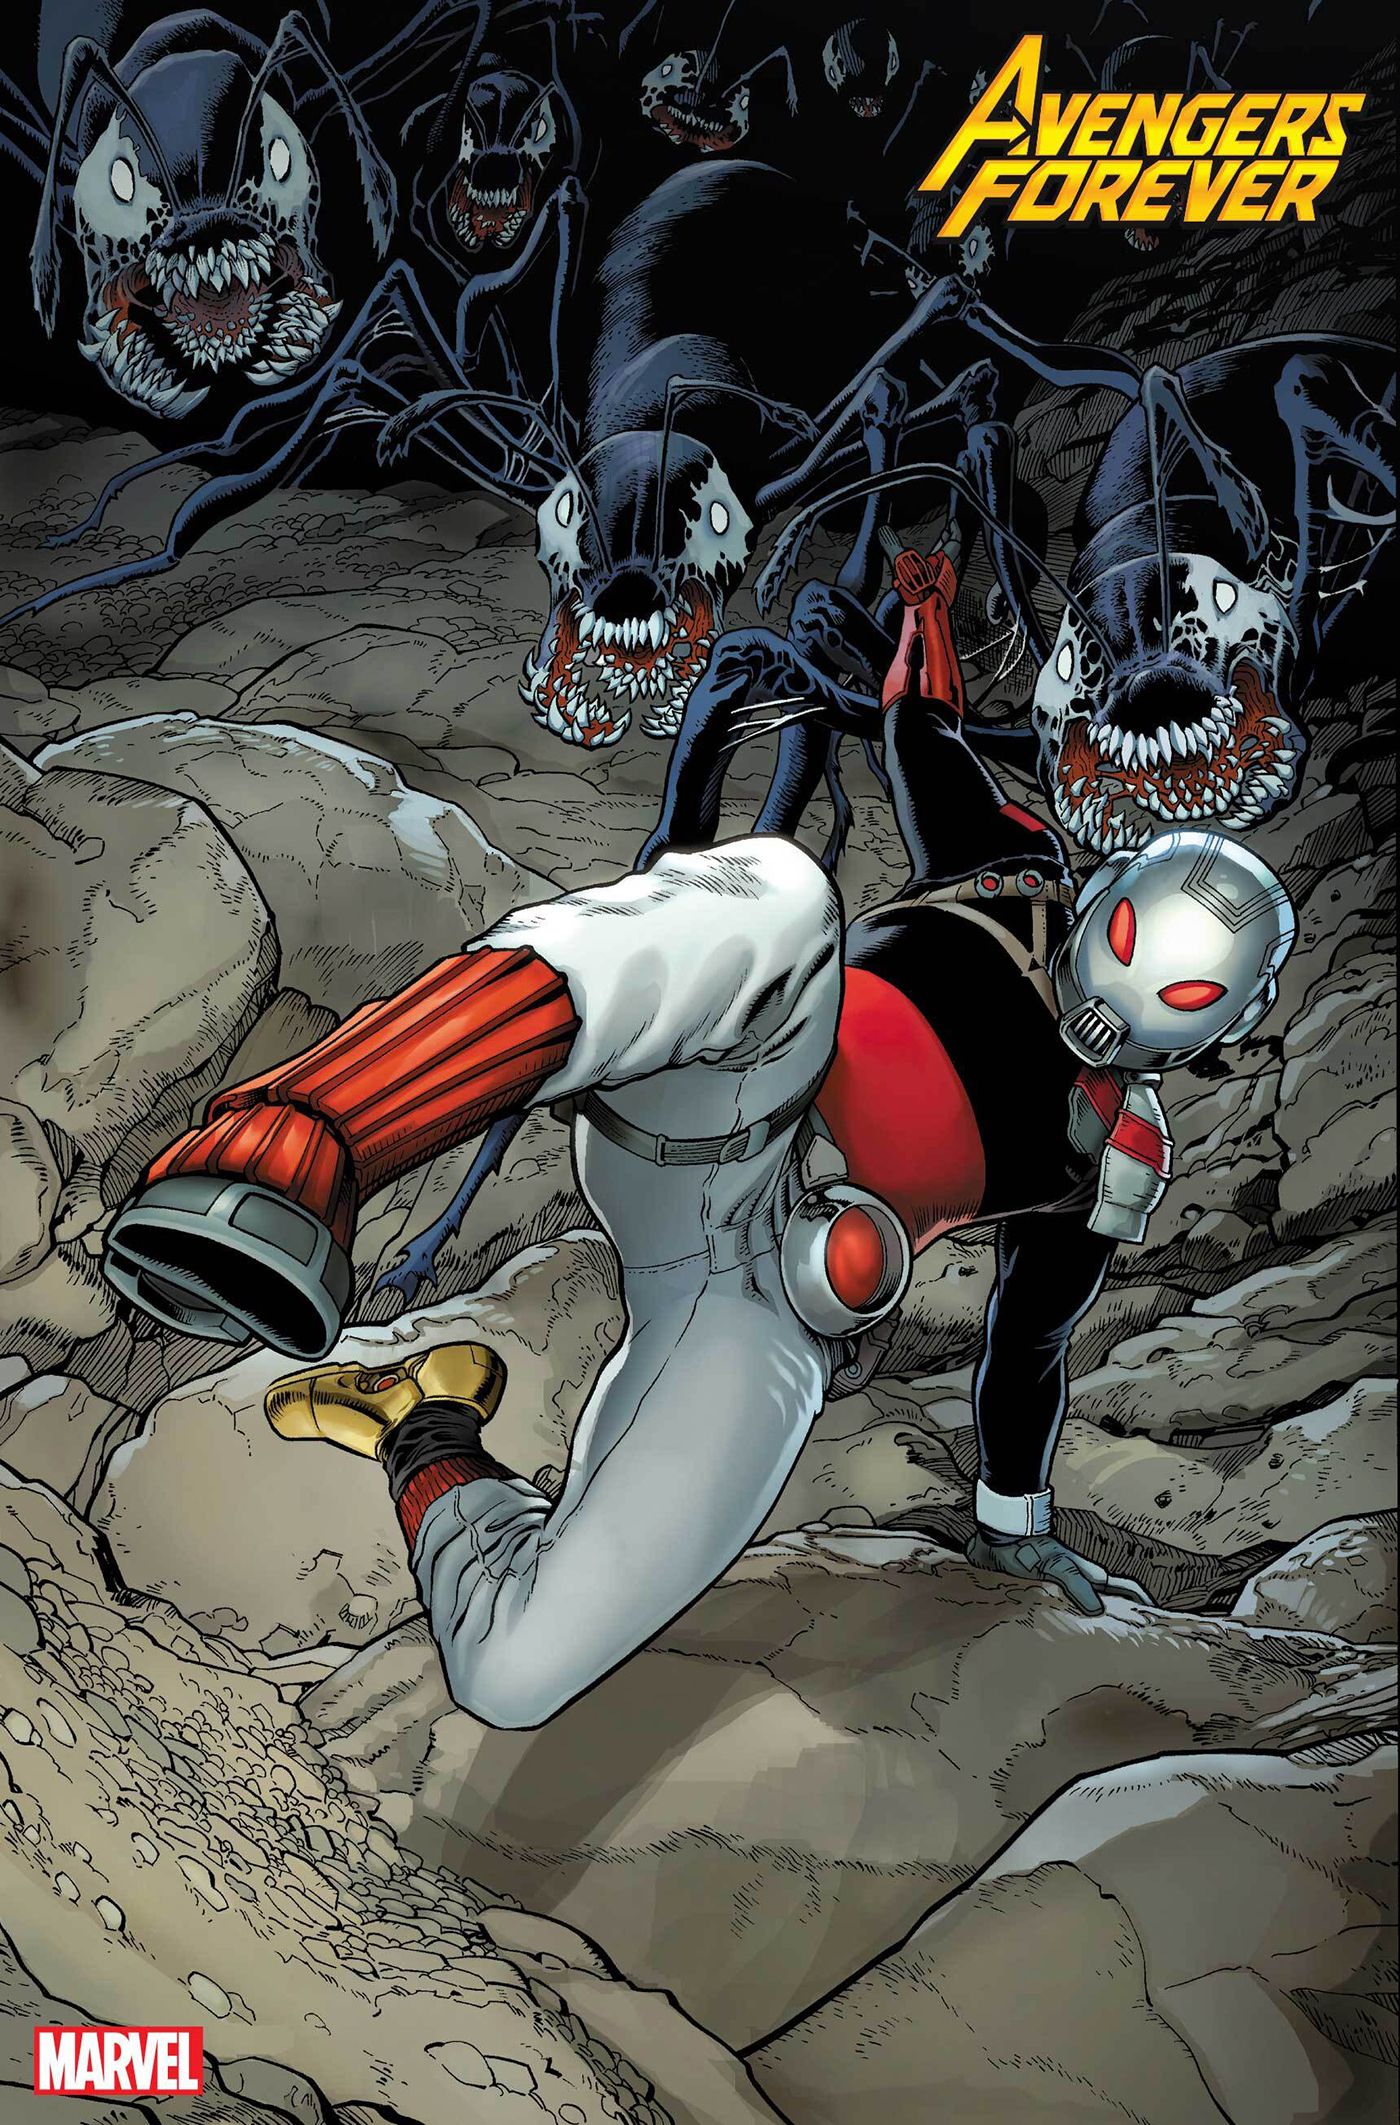 Ant-Man runs away from venomized ants.